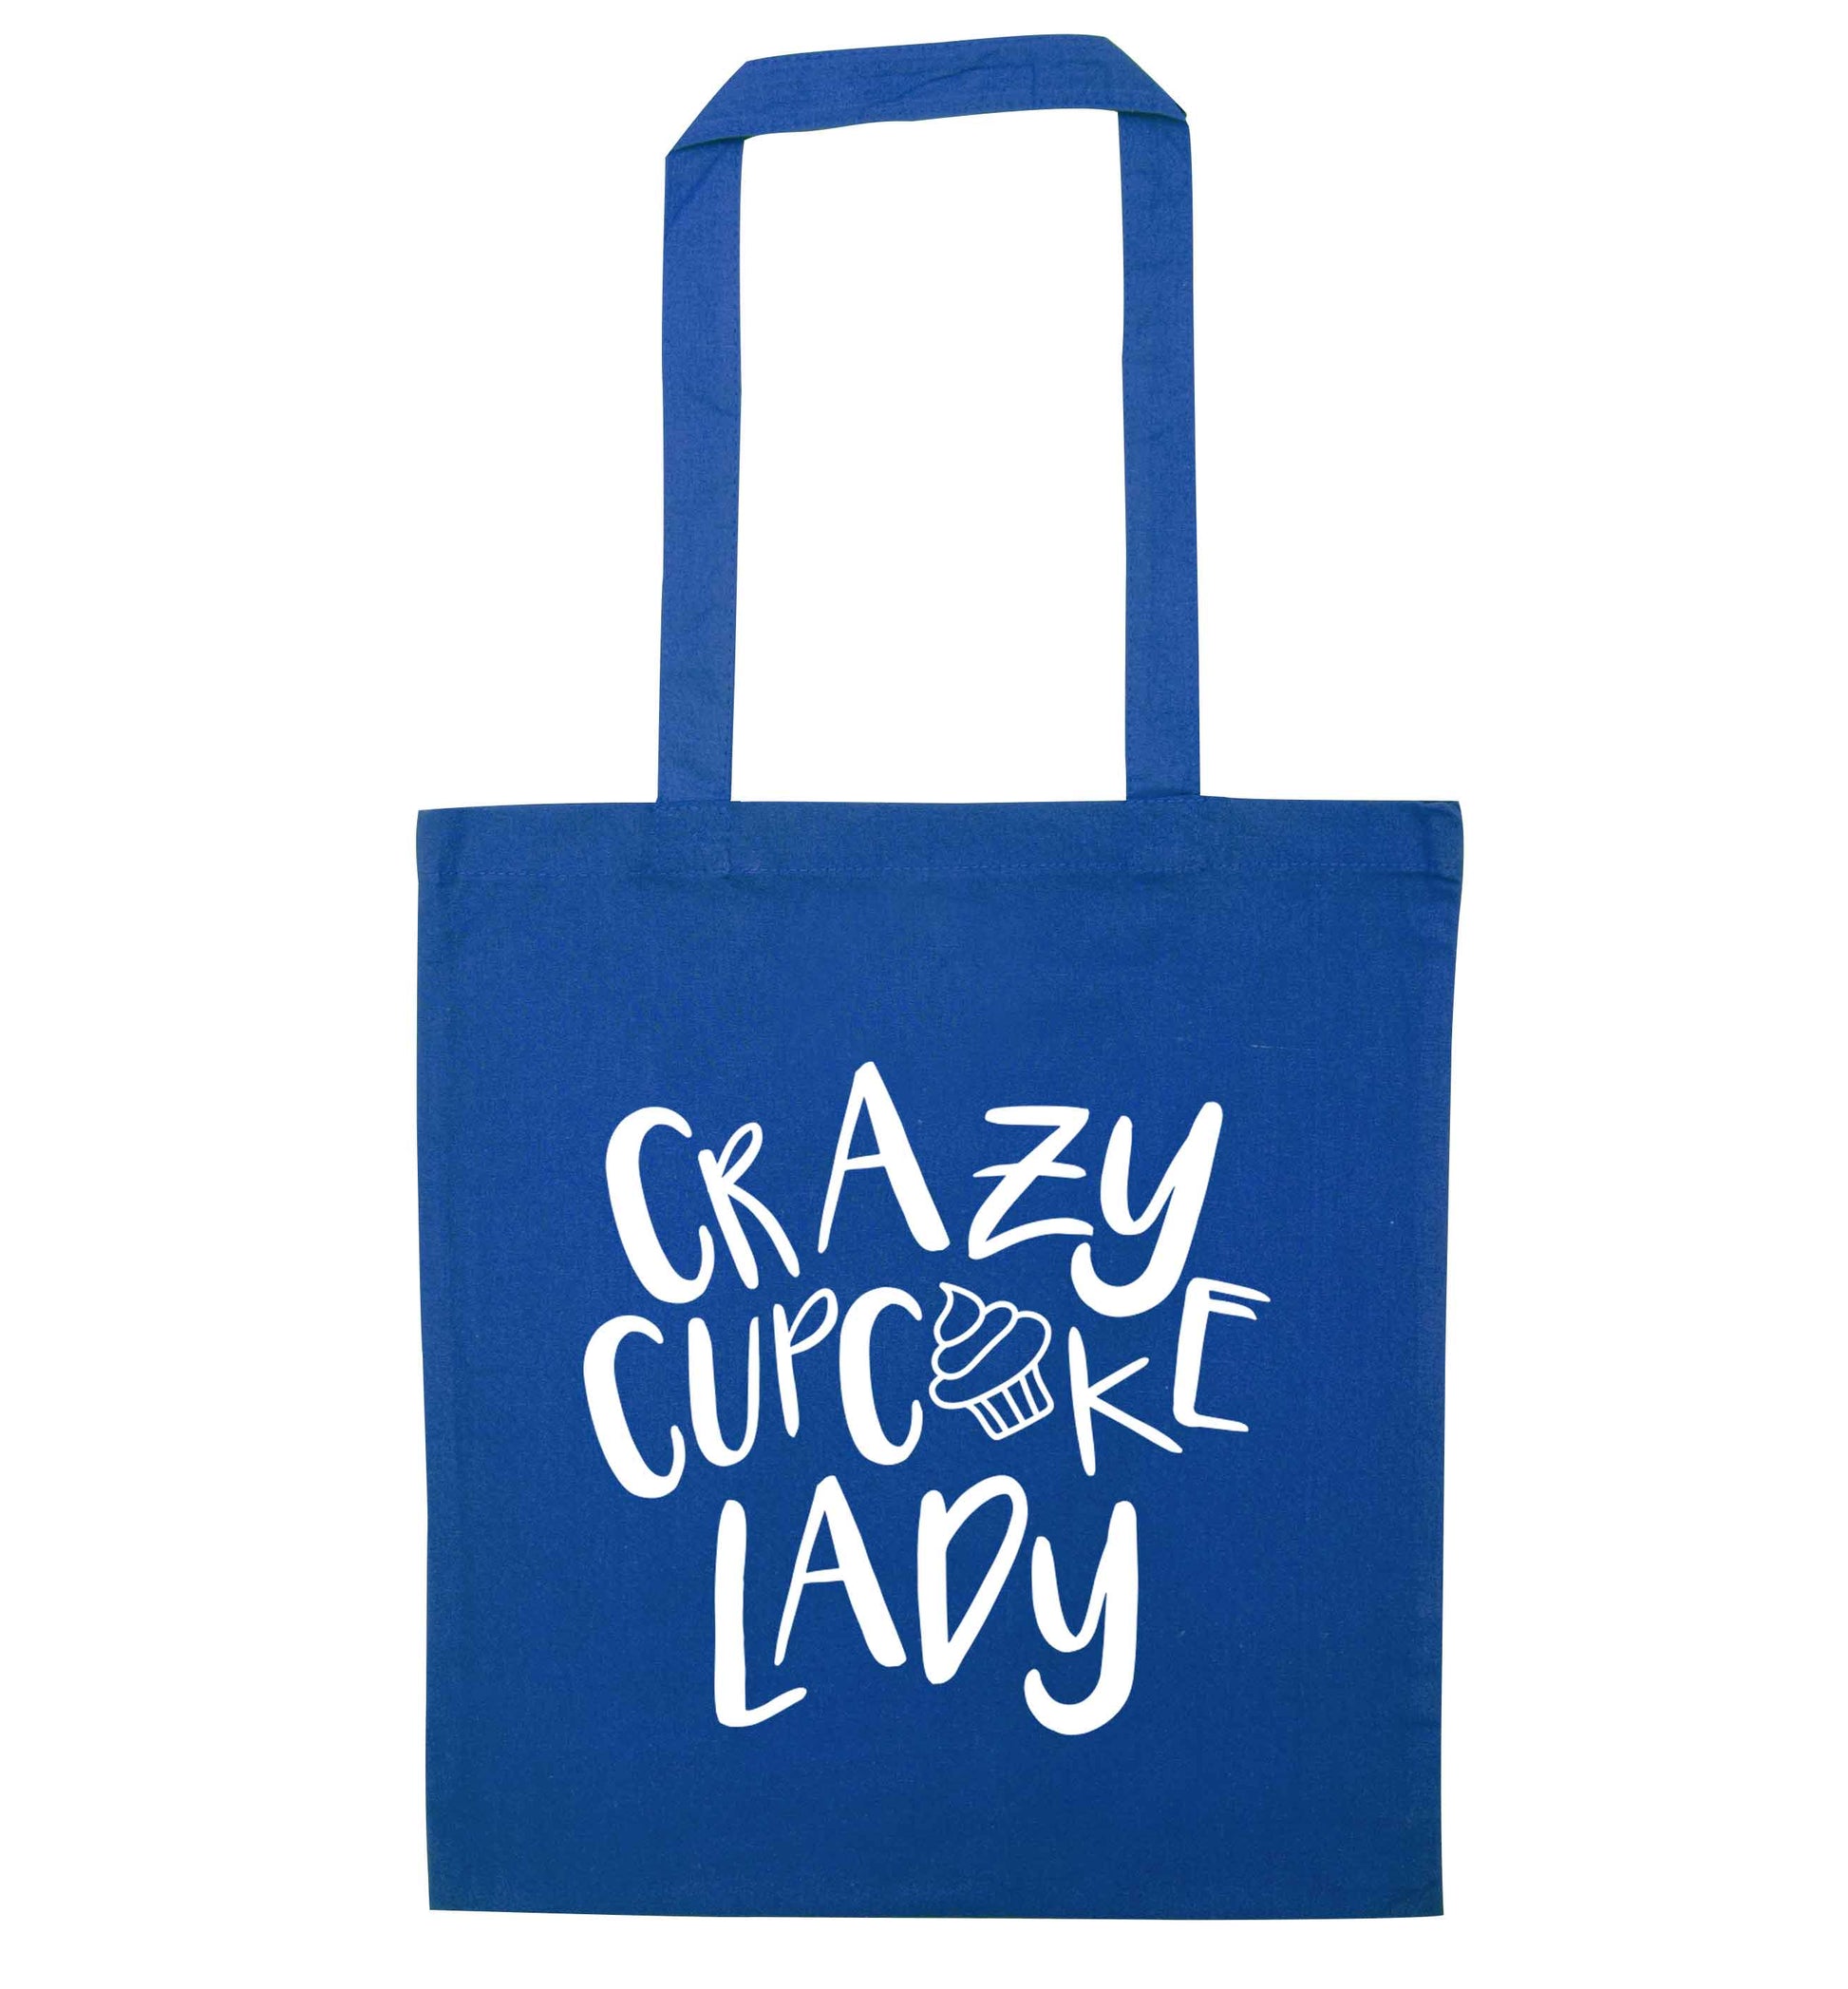 Crazy cupcake lady blue tote bag